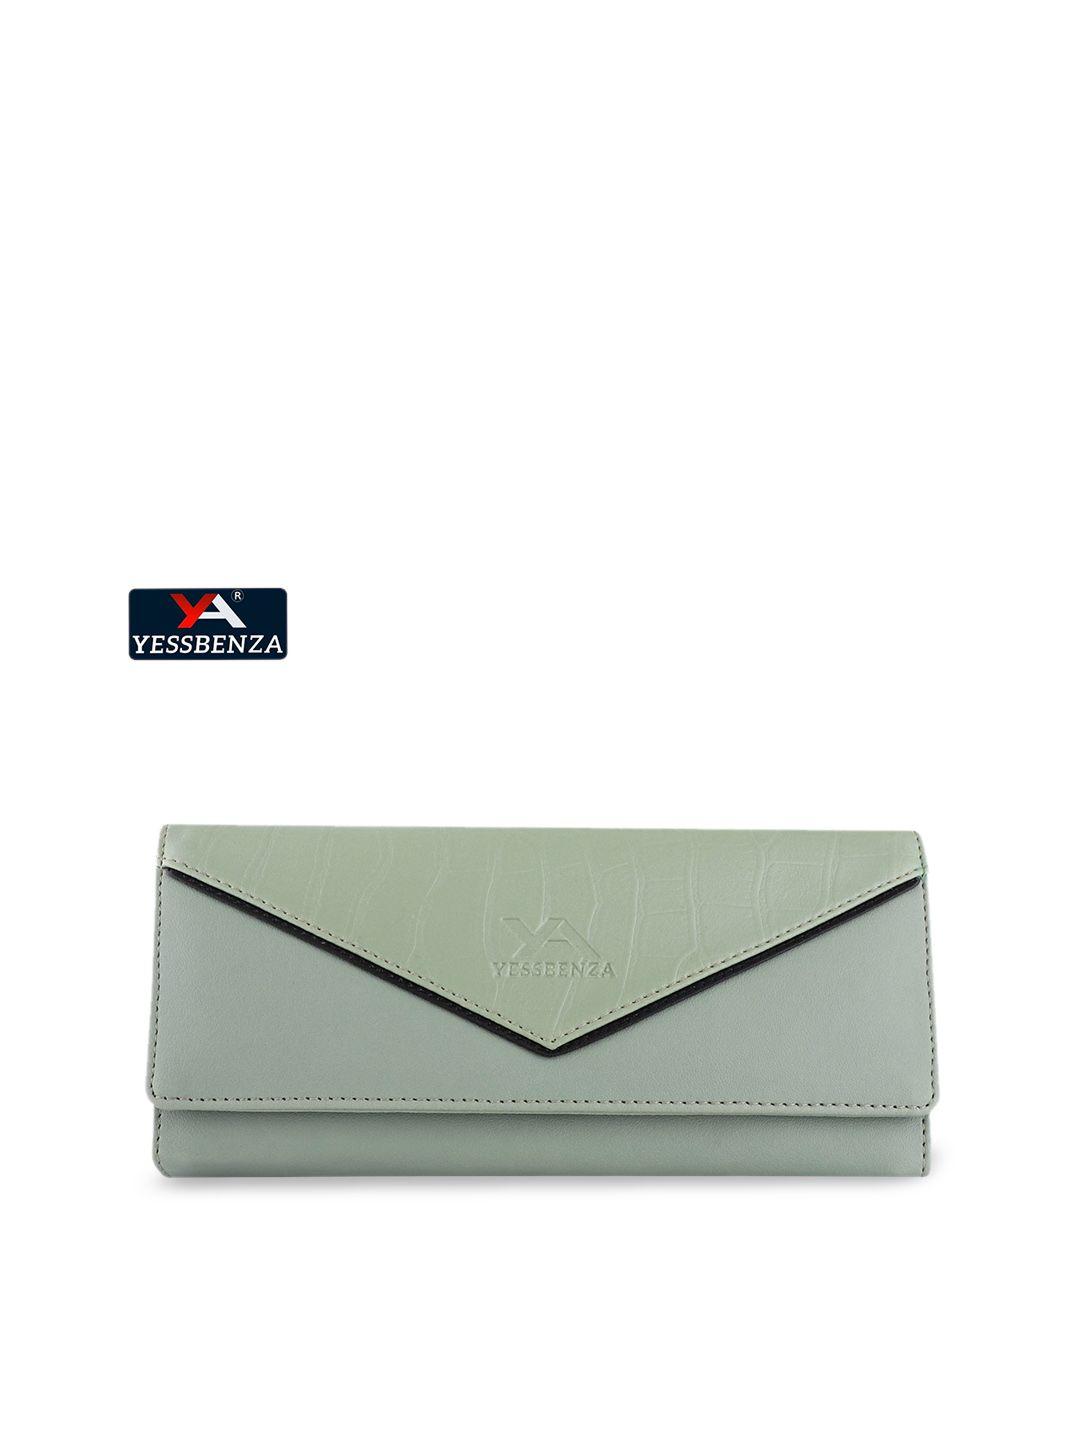 yessbenza women olive green envelope clutch